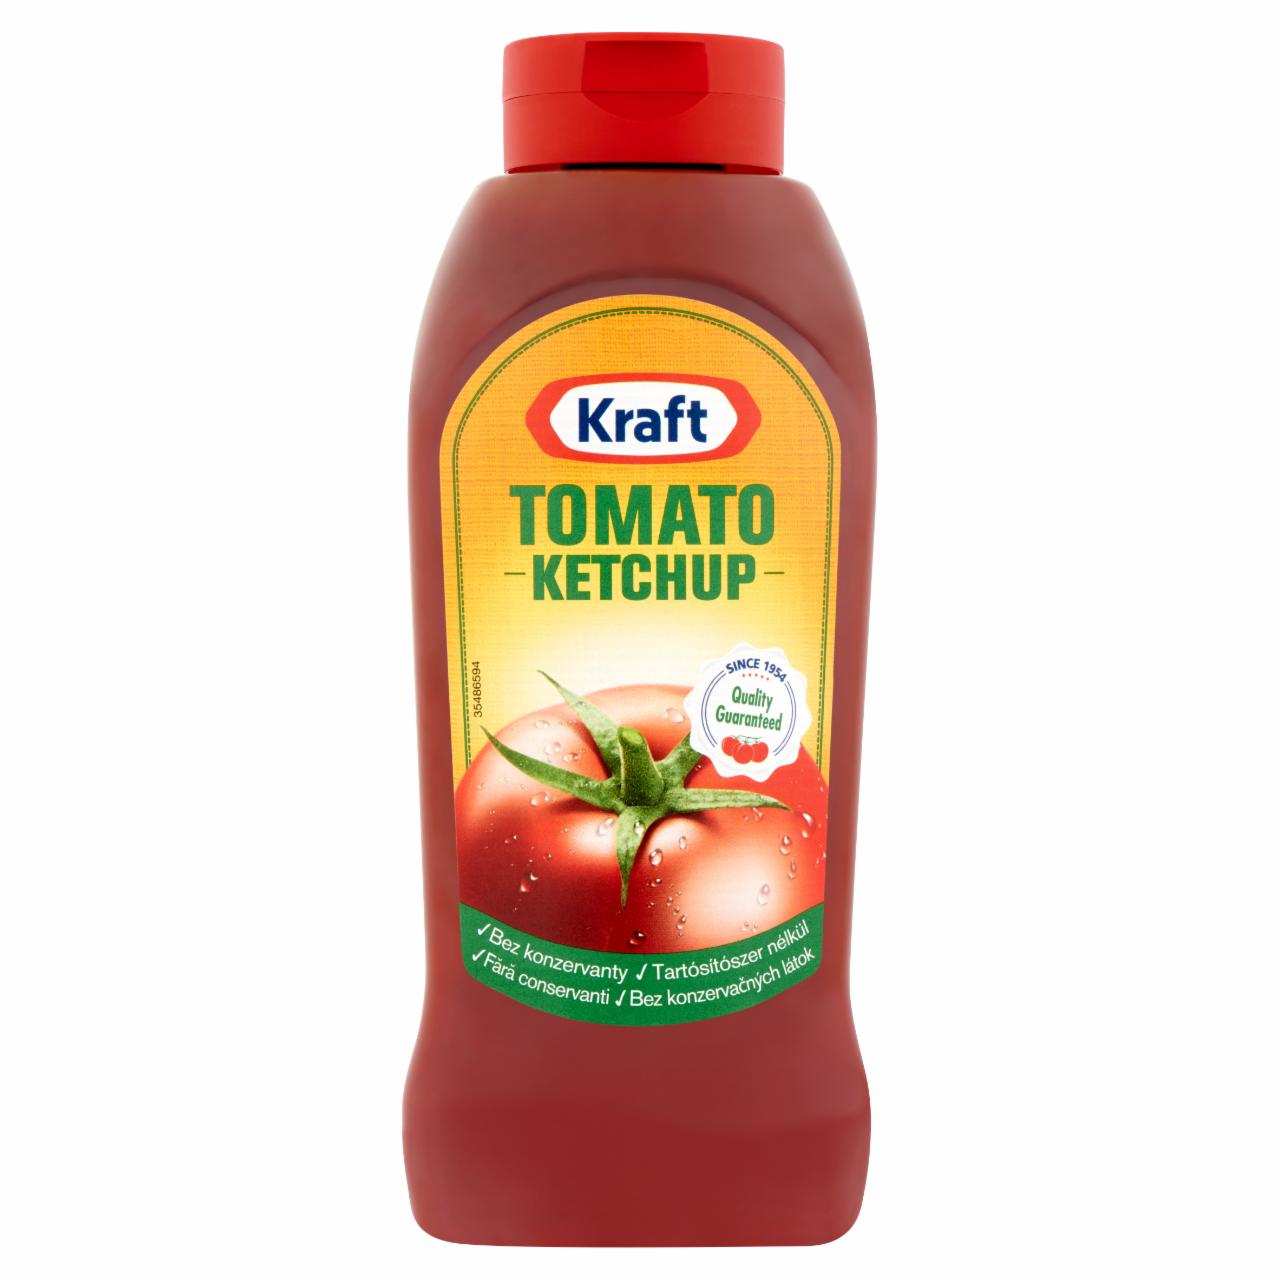 Képek - Kraft paradicsom ketchup 970 g